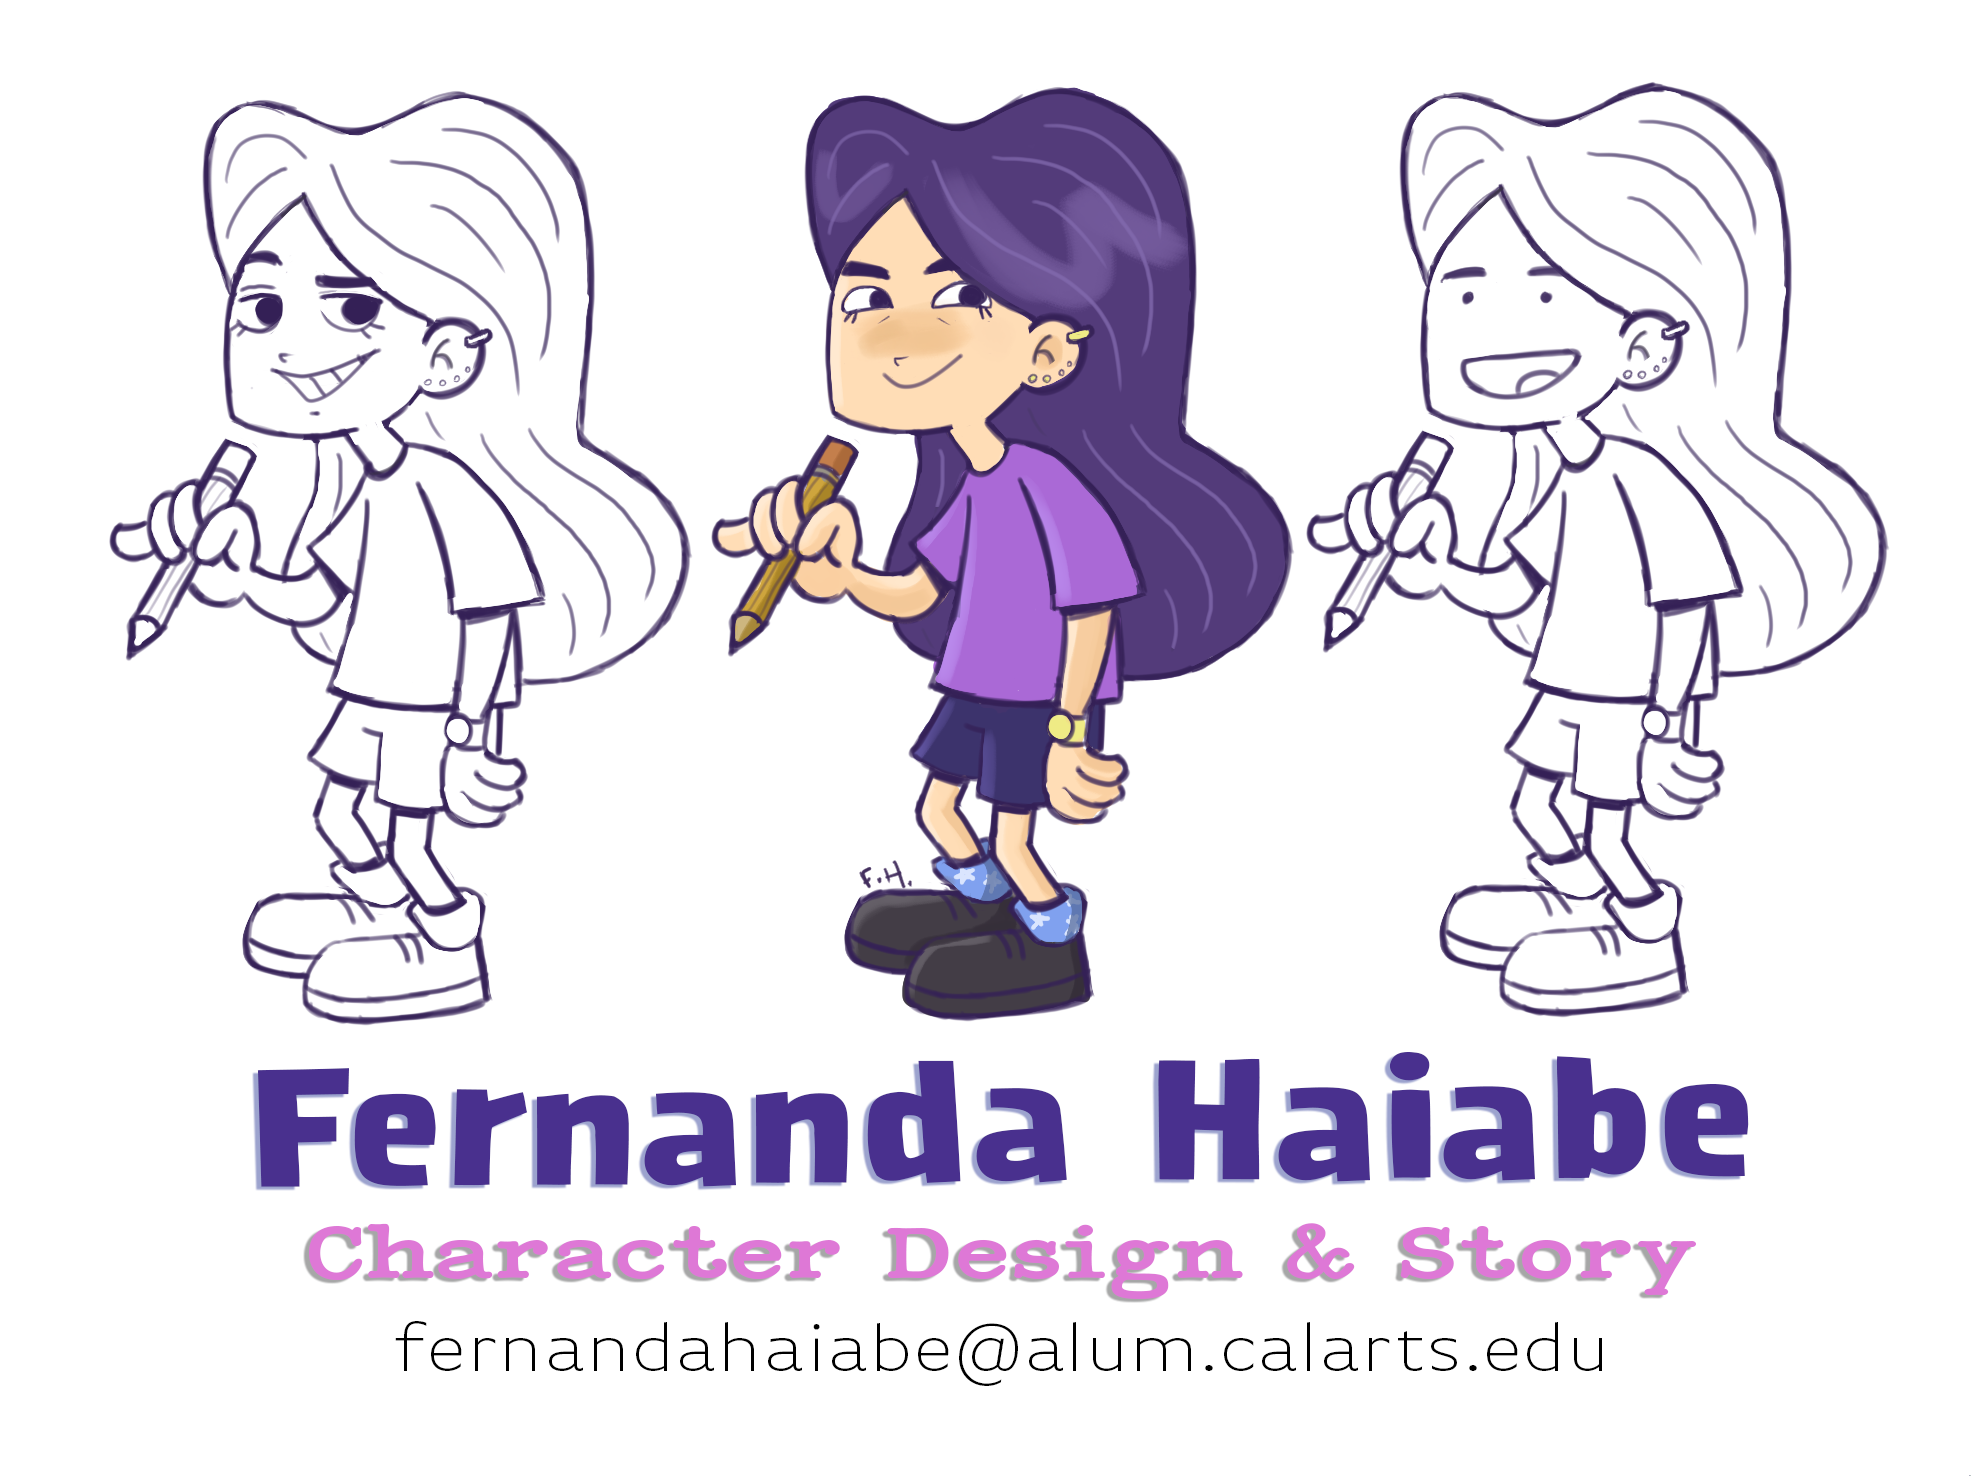 Fernanda Haiabe